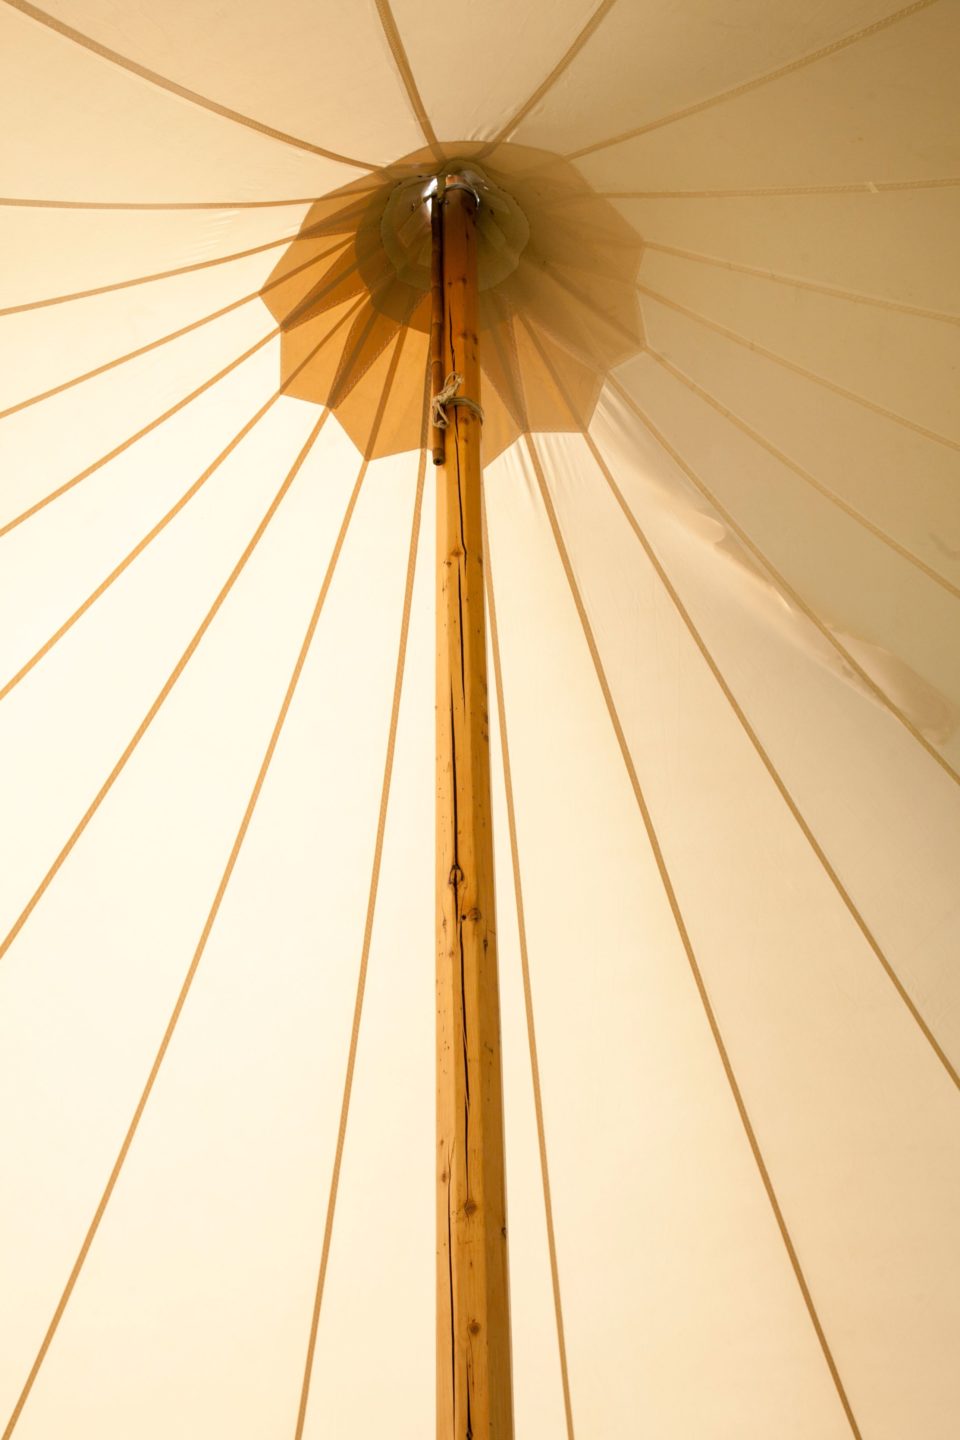 interior sperry sailcloth tent